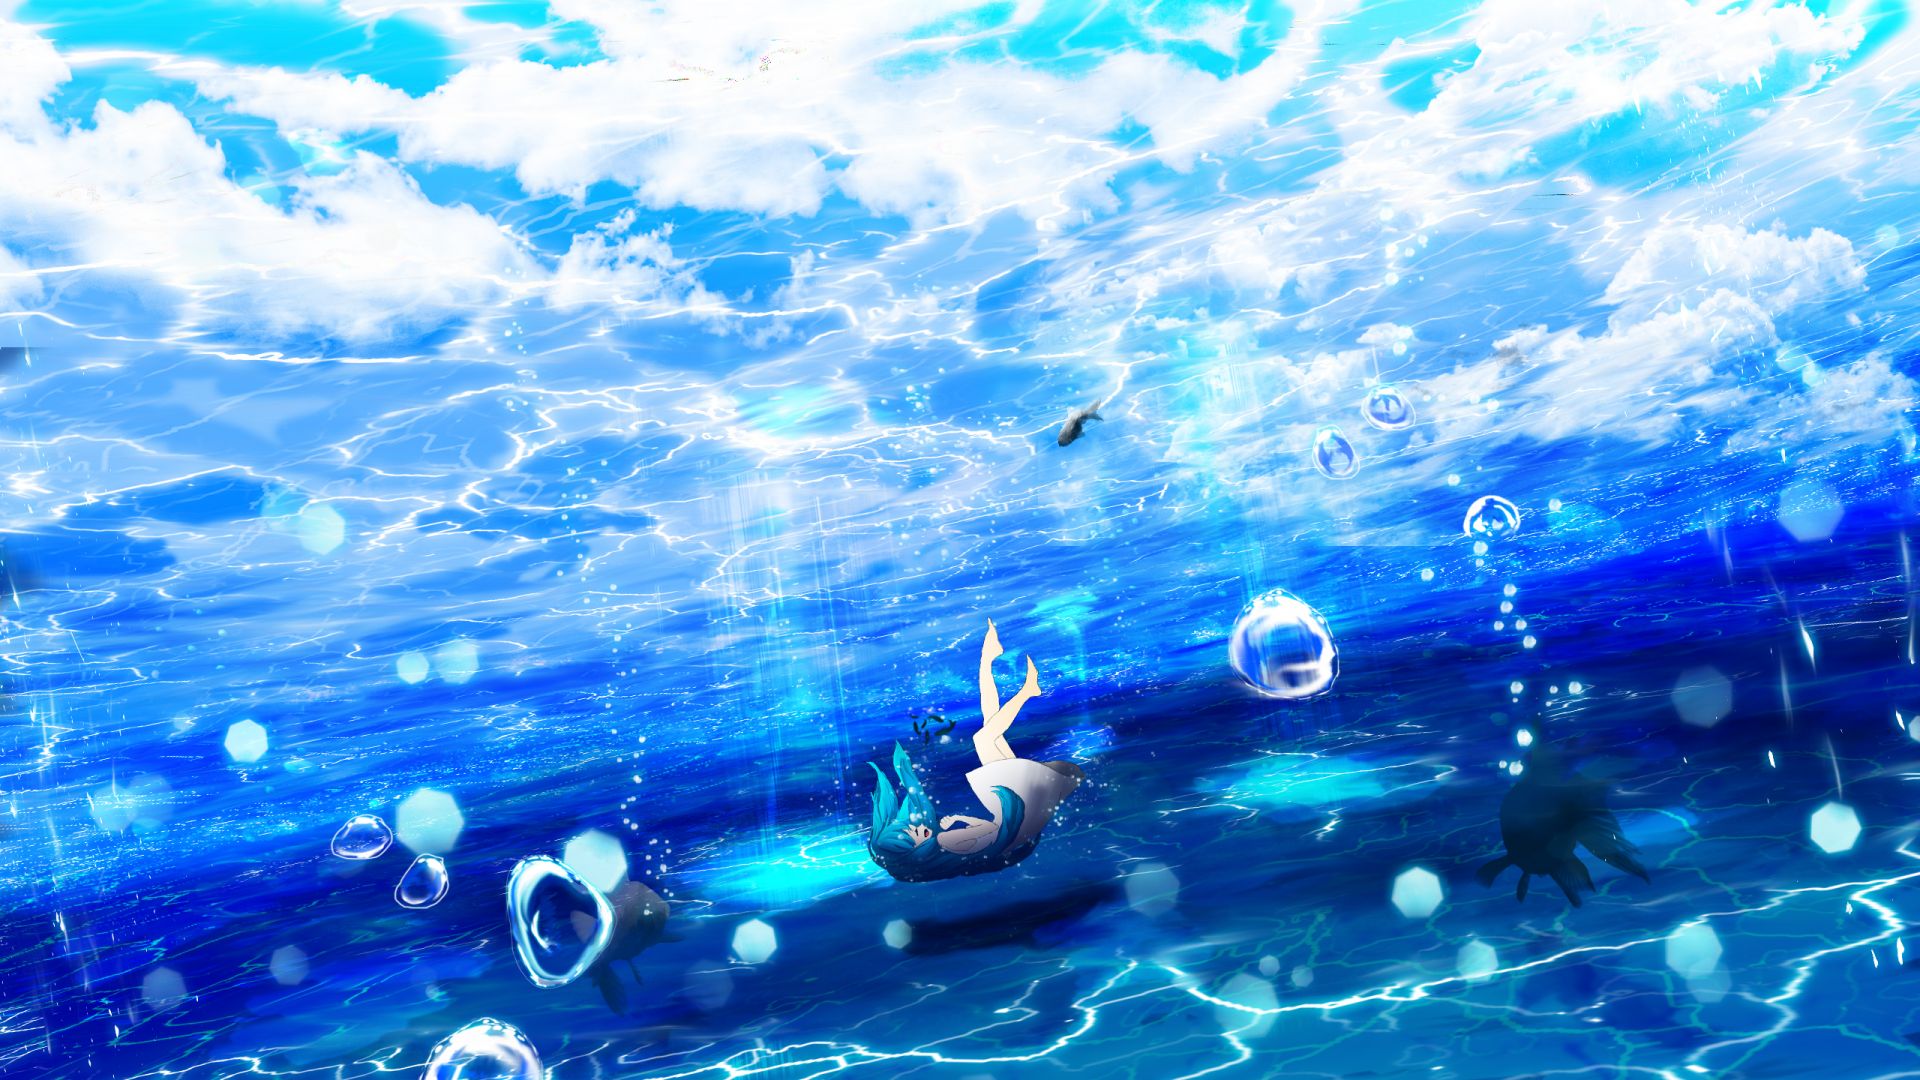 8. "Blue Hair Anime Girl in Swimsuit" - wide 8